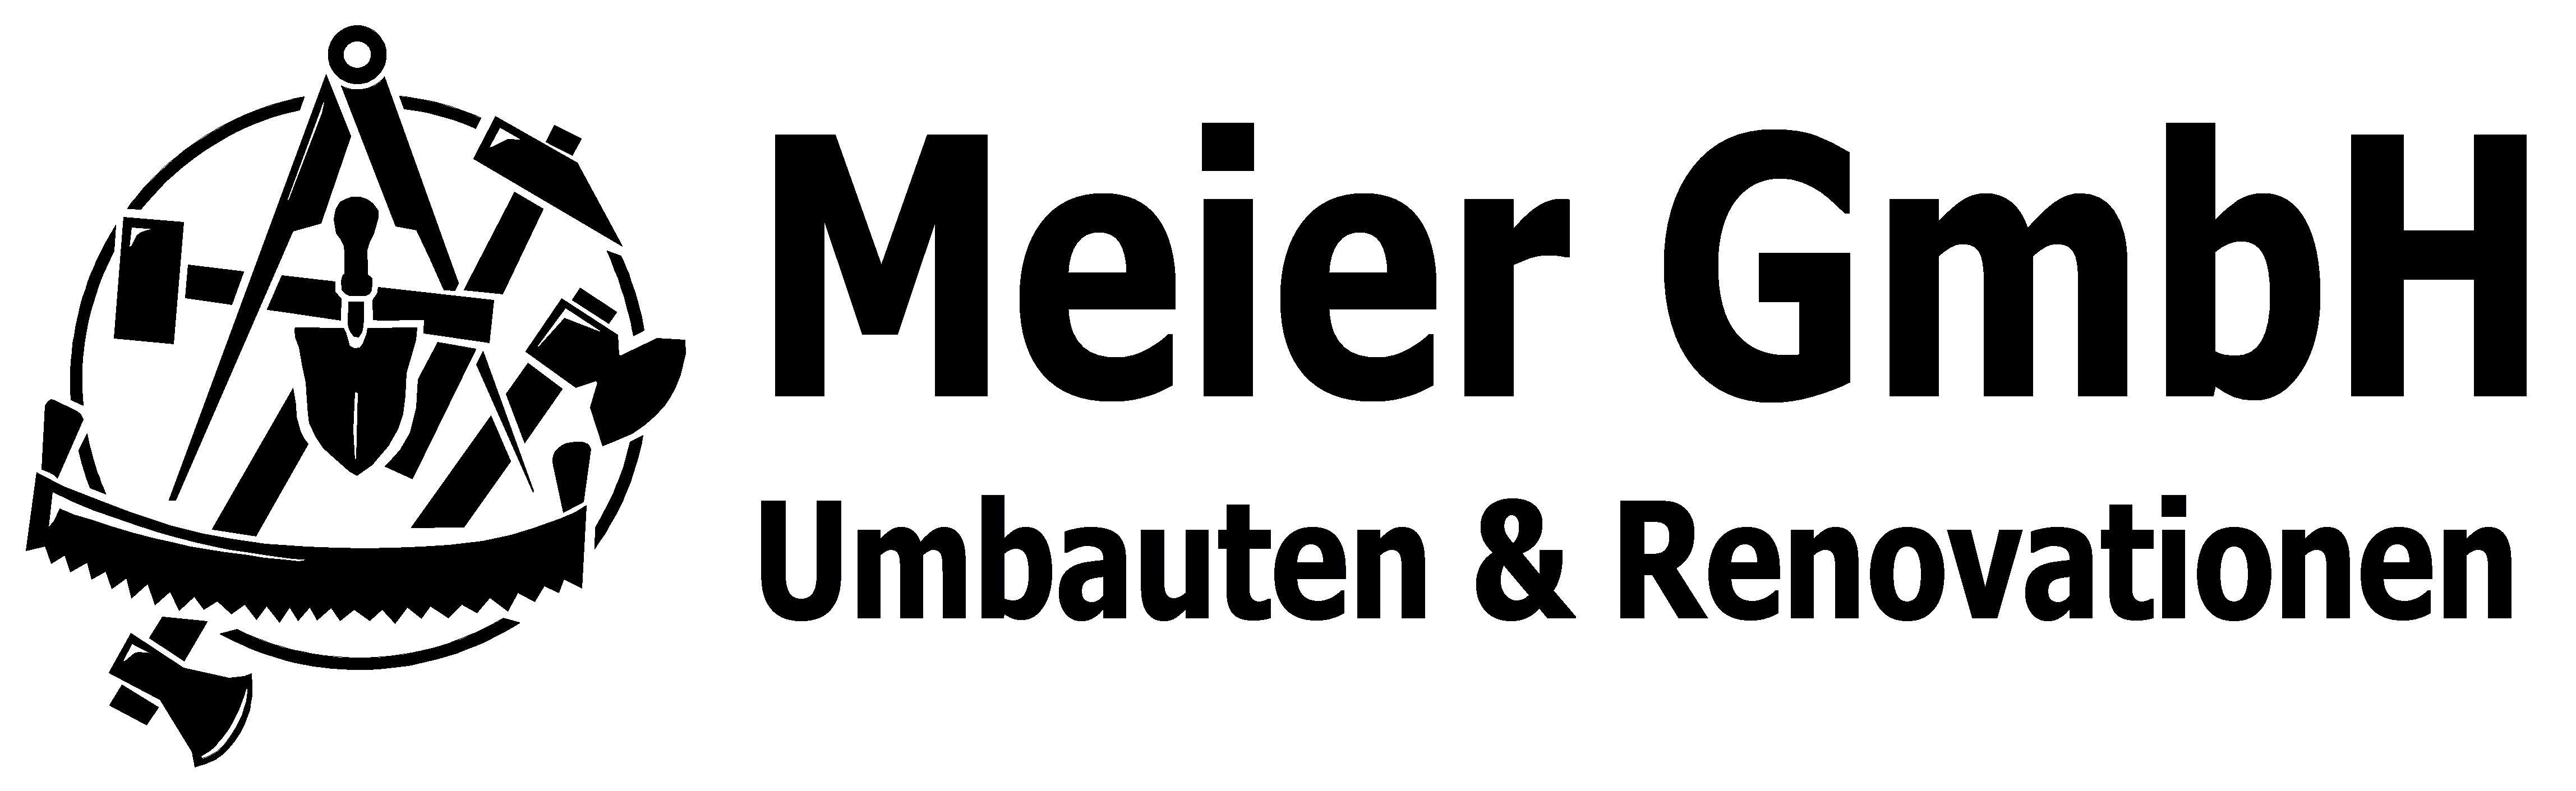 Logo Meier schwarz